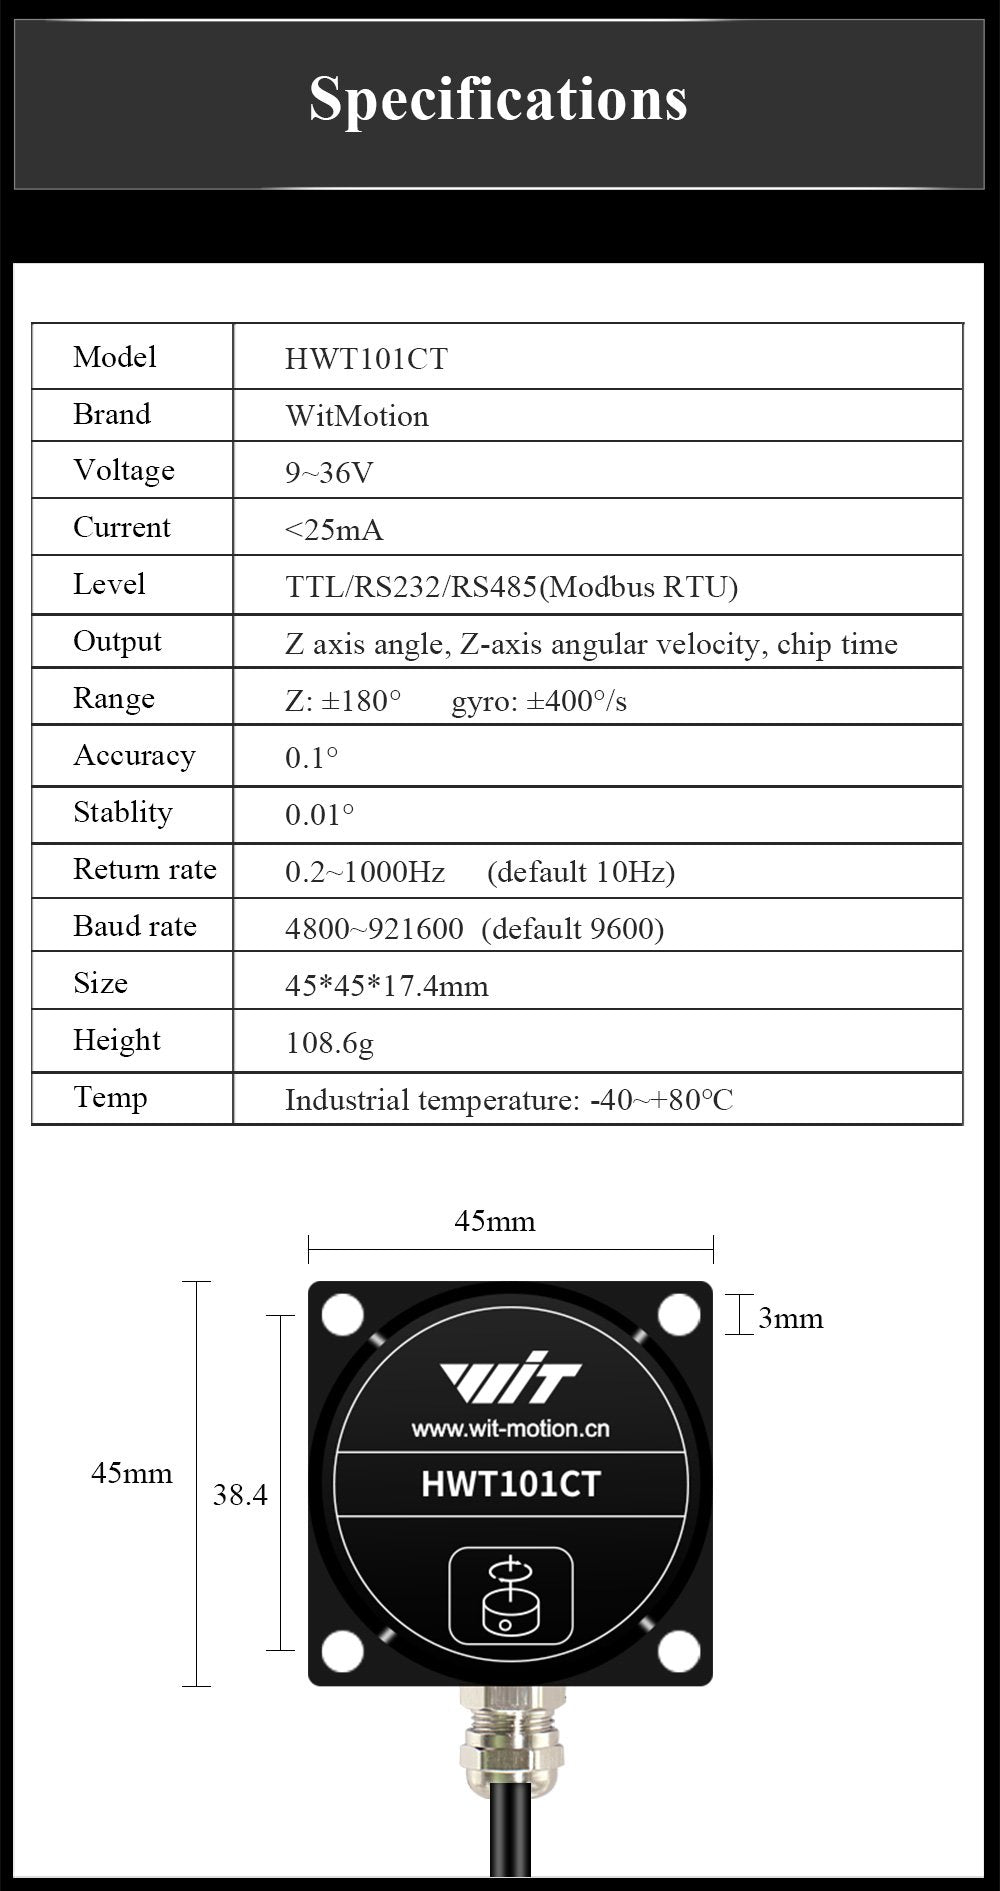 1-Axis HWT101CT-485 Military Grade Z-Axis Inclinometer, MEMS Tilt Sensor, Built-in Highly Integrated Crystal Gyroscope Rotation Angle Attitude Sensor Kalman Filter Algorithm, Automatic Data Storage, Multi-Cascade Support